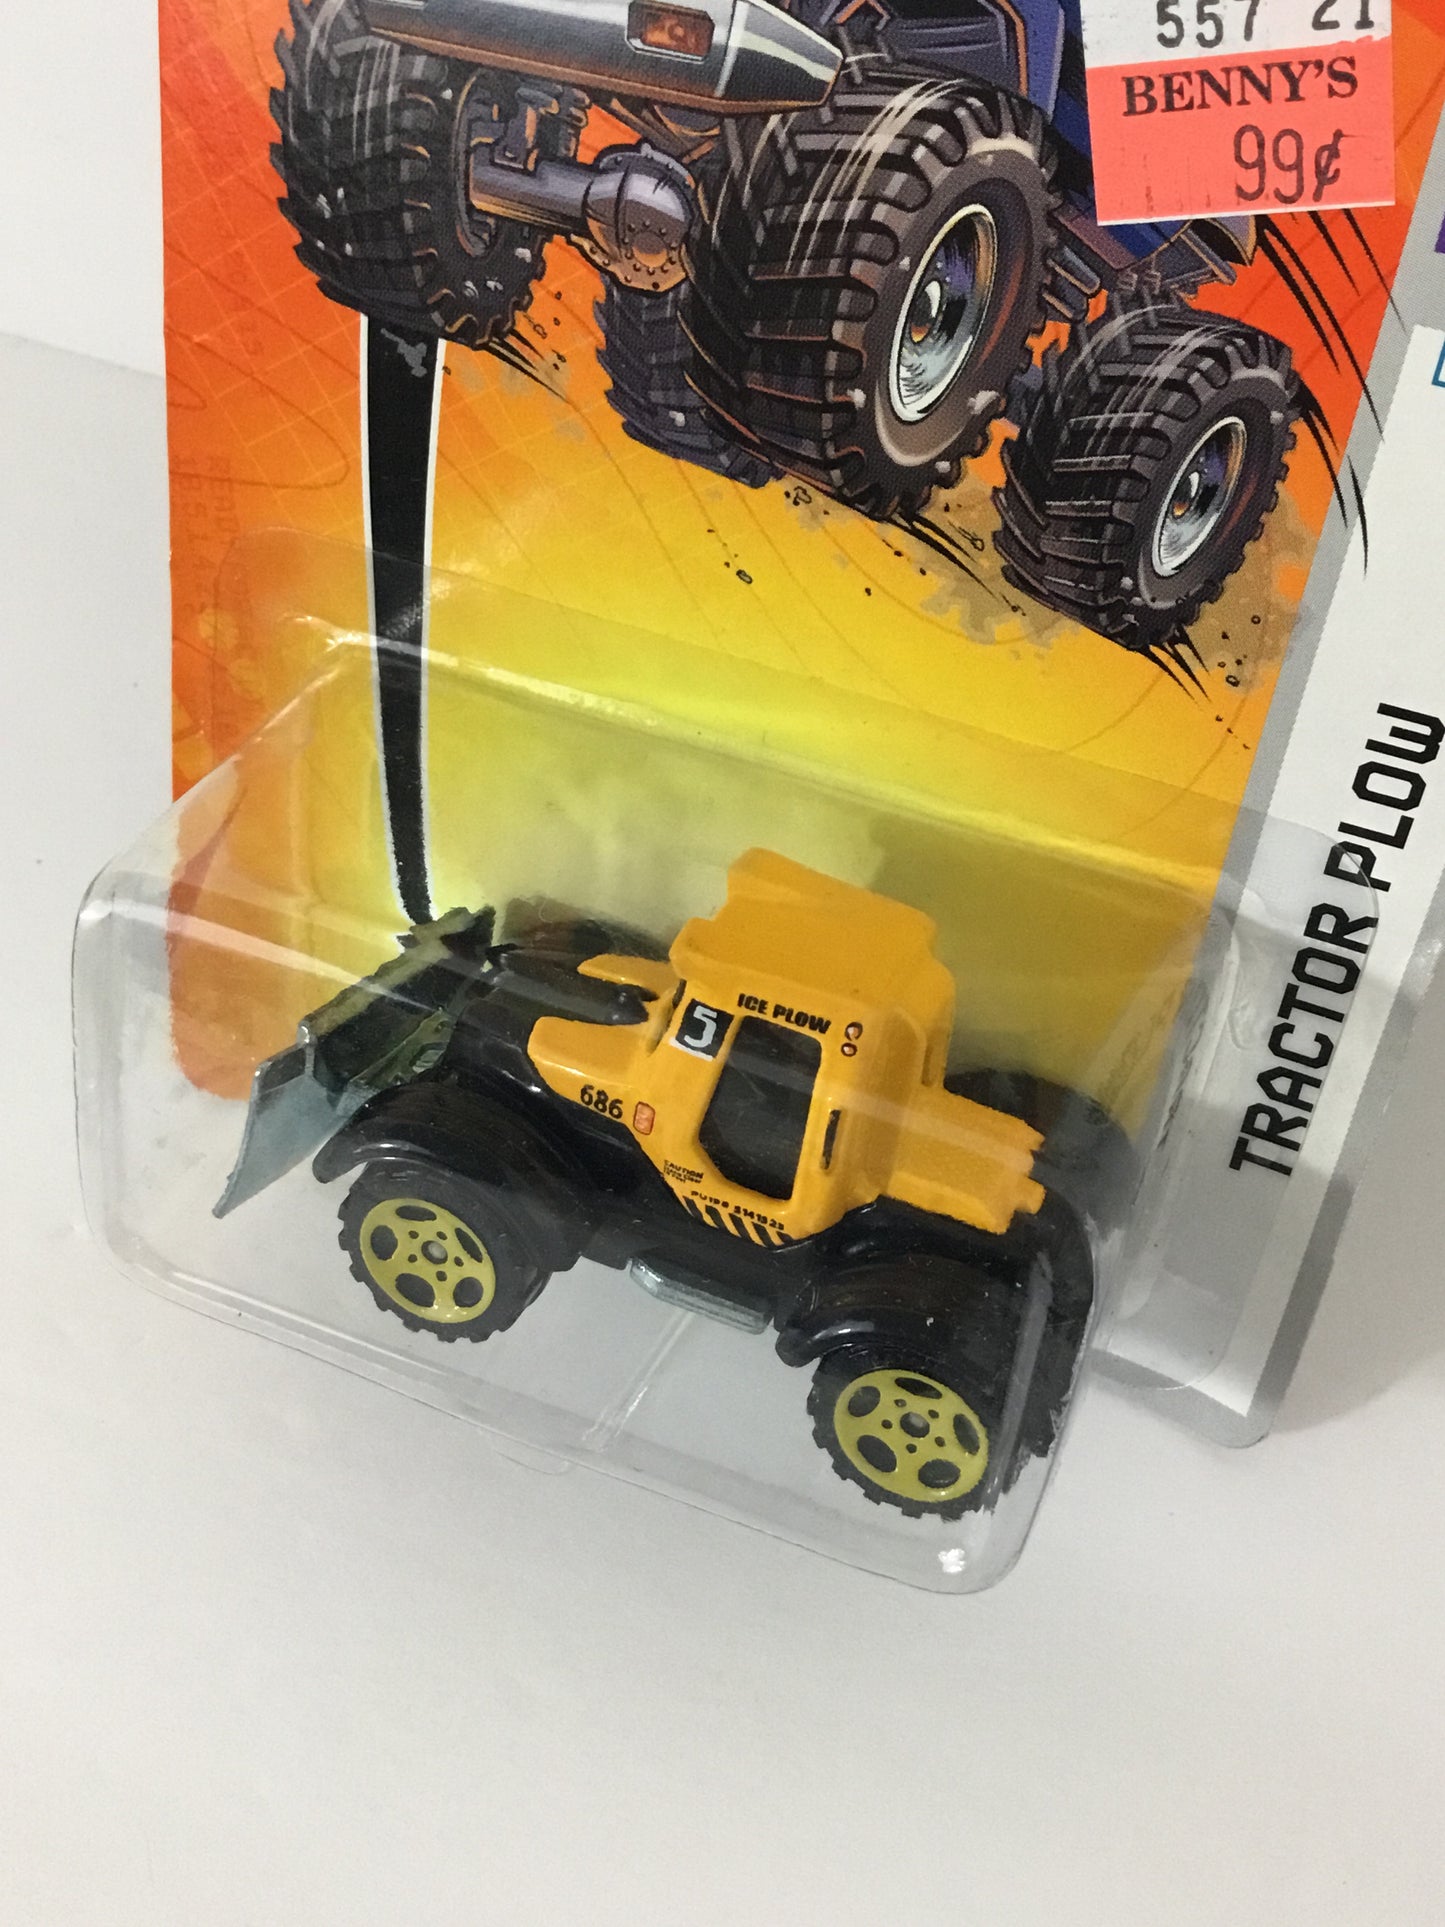 Matchbox #30 mbx metal Tractor Plow  (8H1)